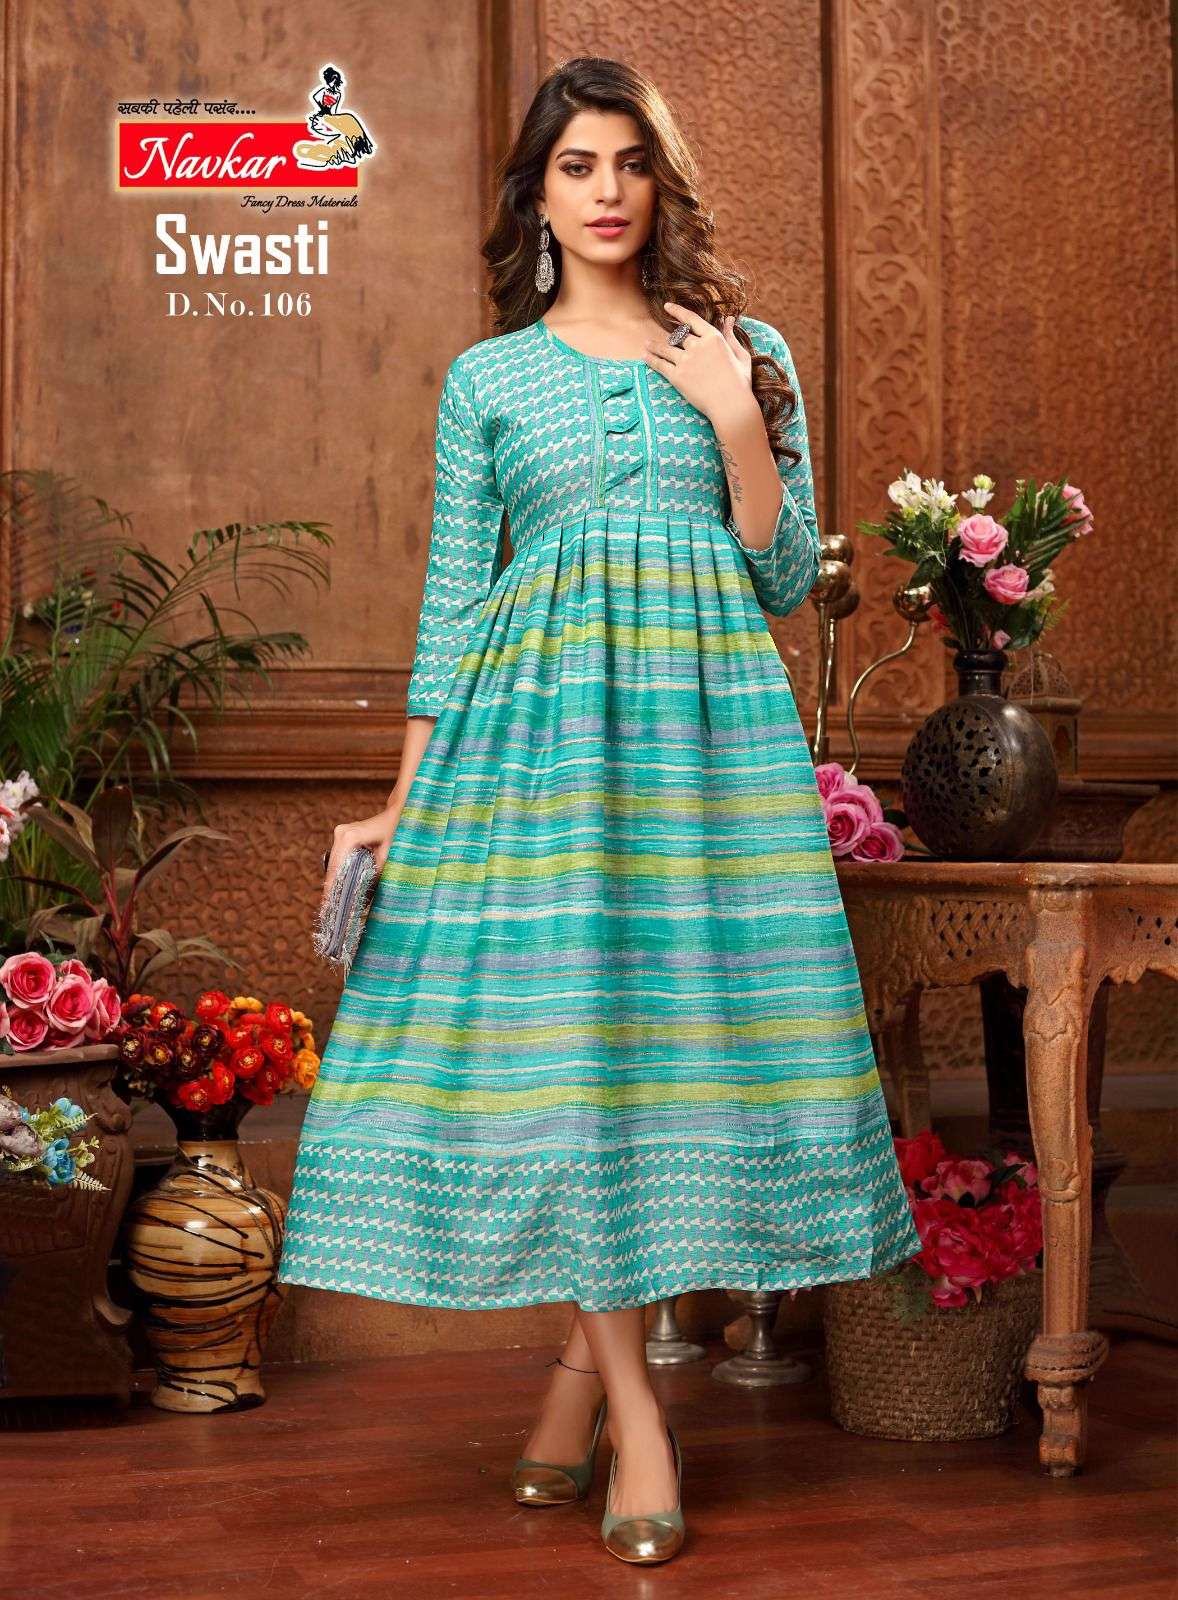 navkar swasti 101-108 series stylish look designer readymade gowns latest collection surat 